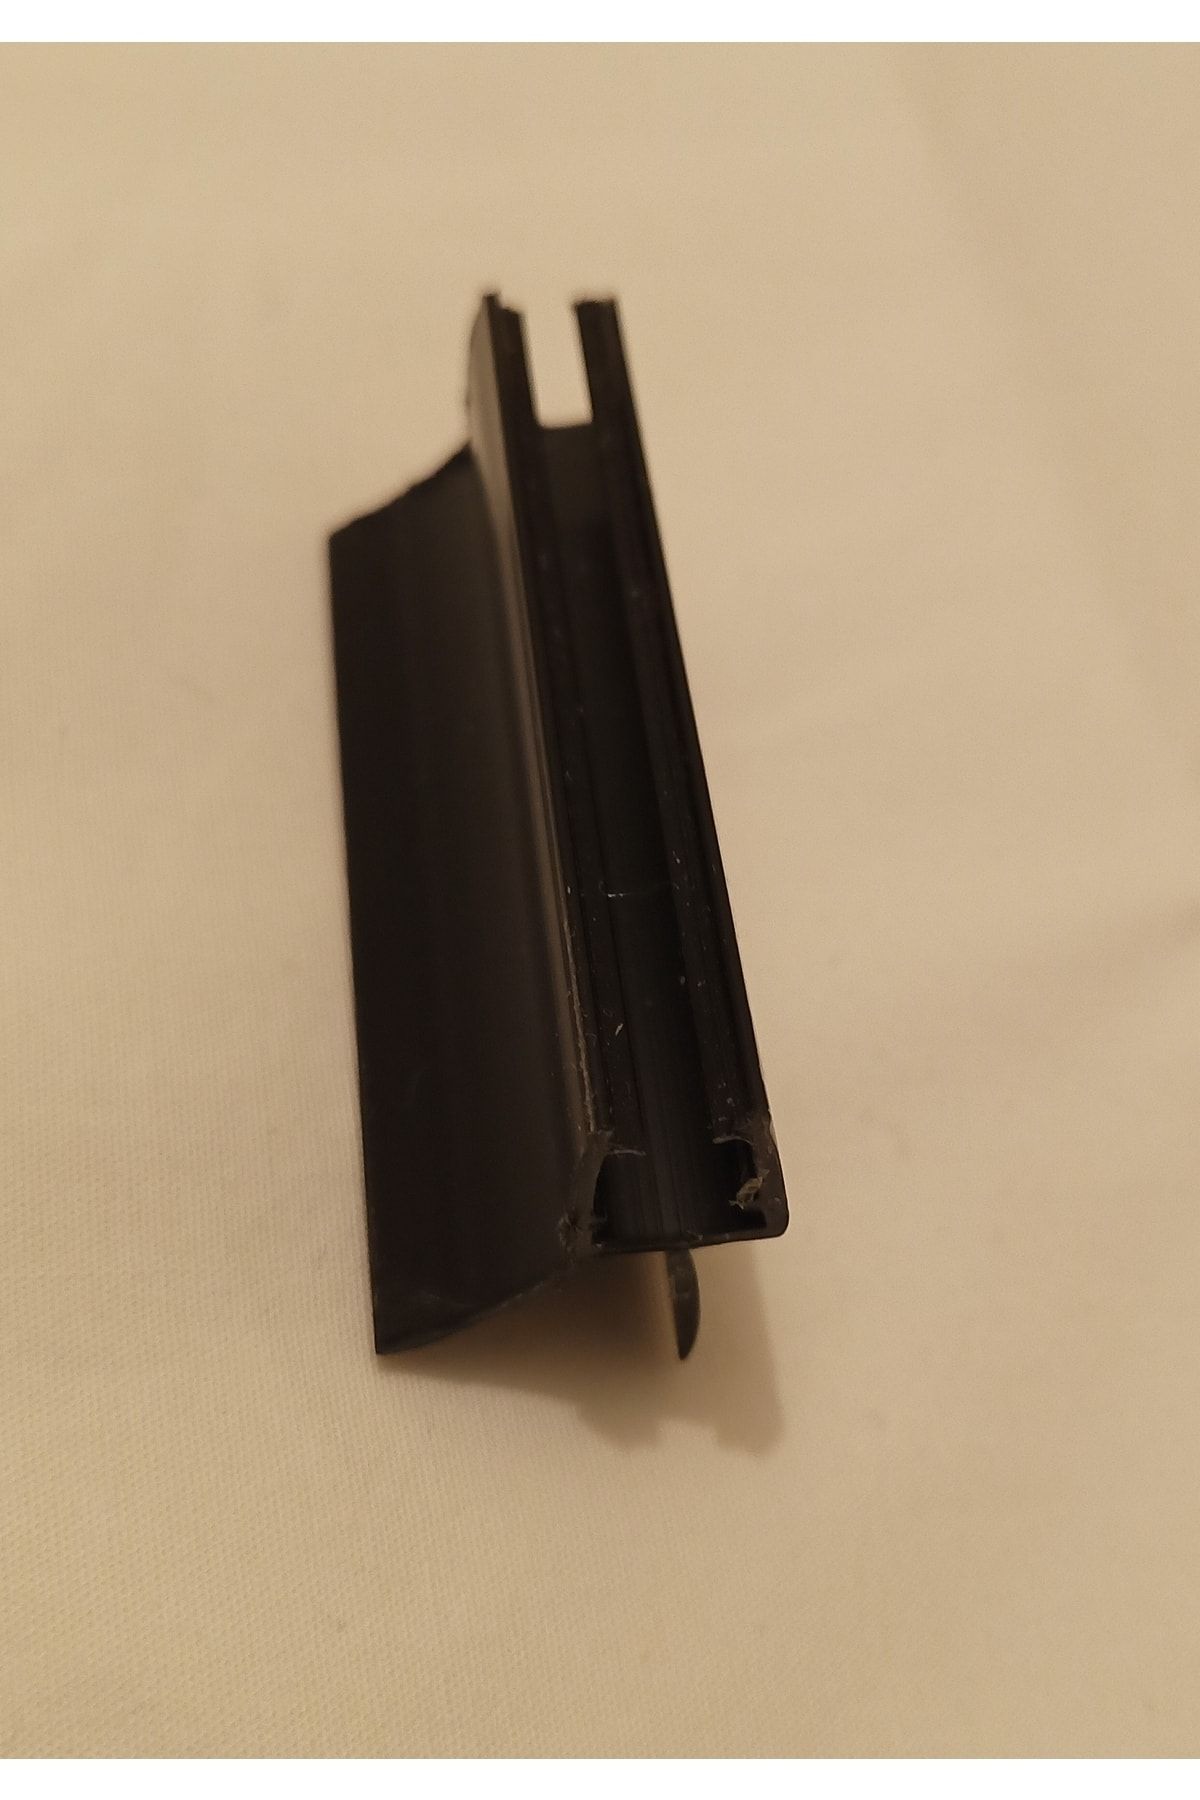 OBERS Siyah Menteşeli Duşakabin Kapı Alt Fitili 100cm. 4-5-6mm